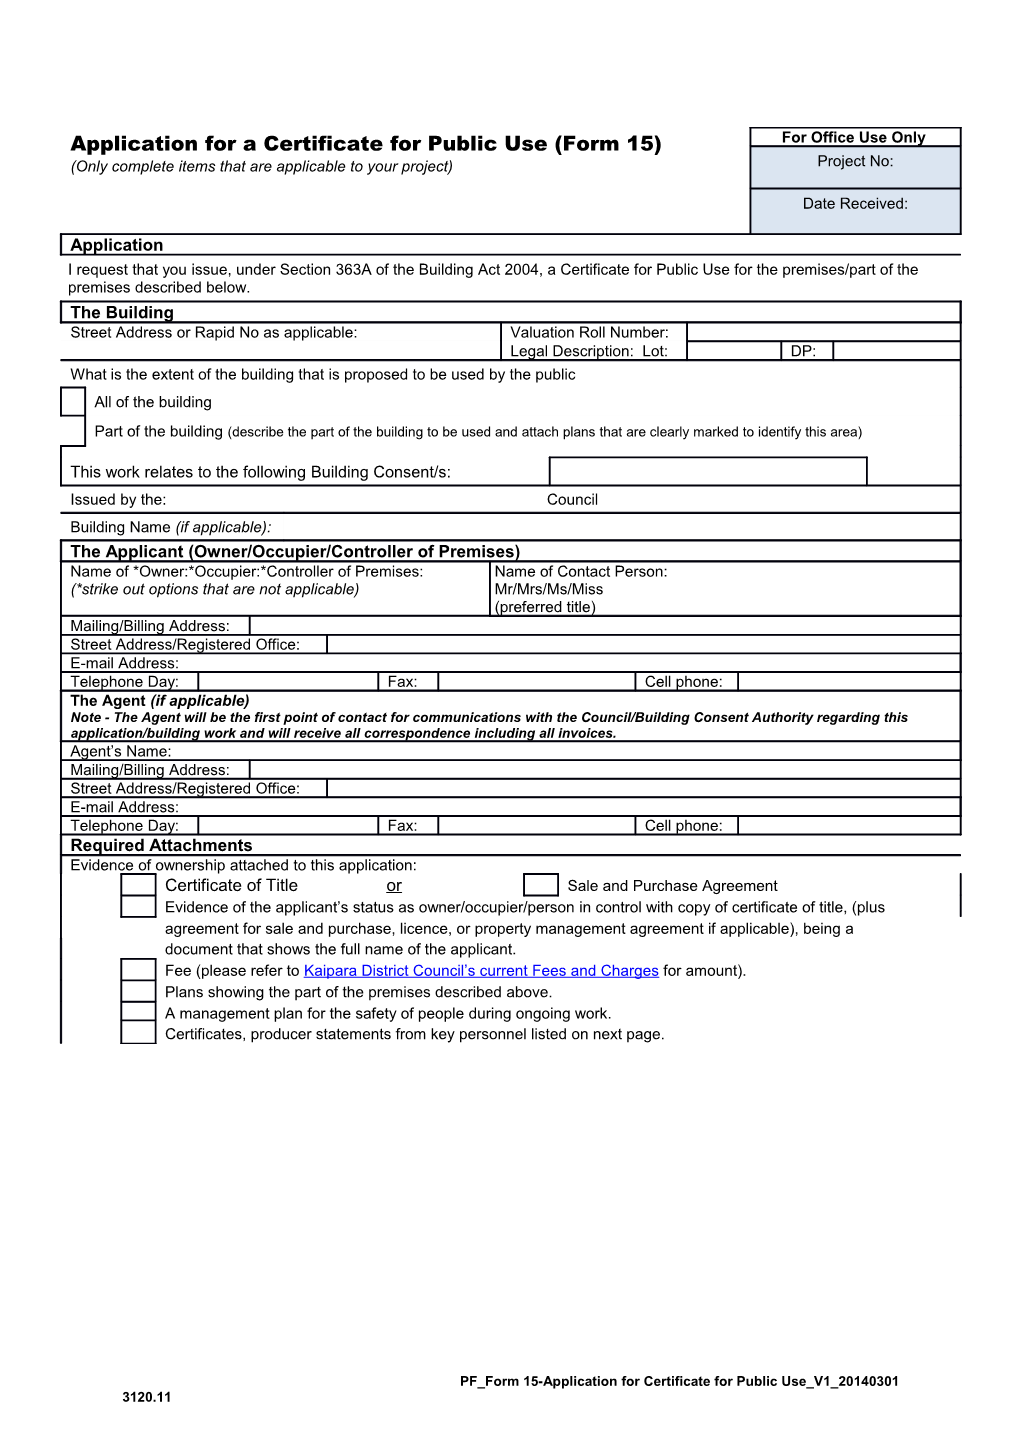 MT Form 15-Application for Certificate for Public Use V1 20140301